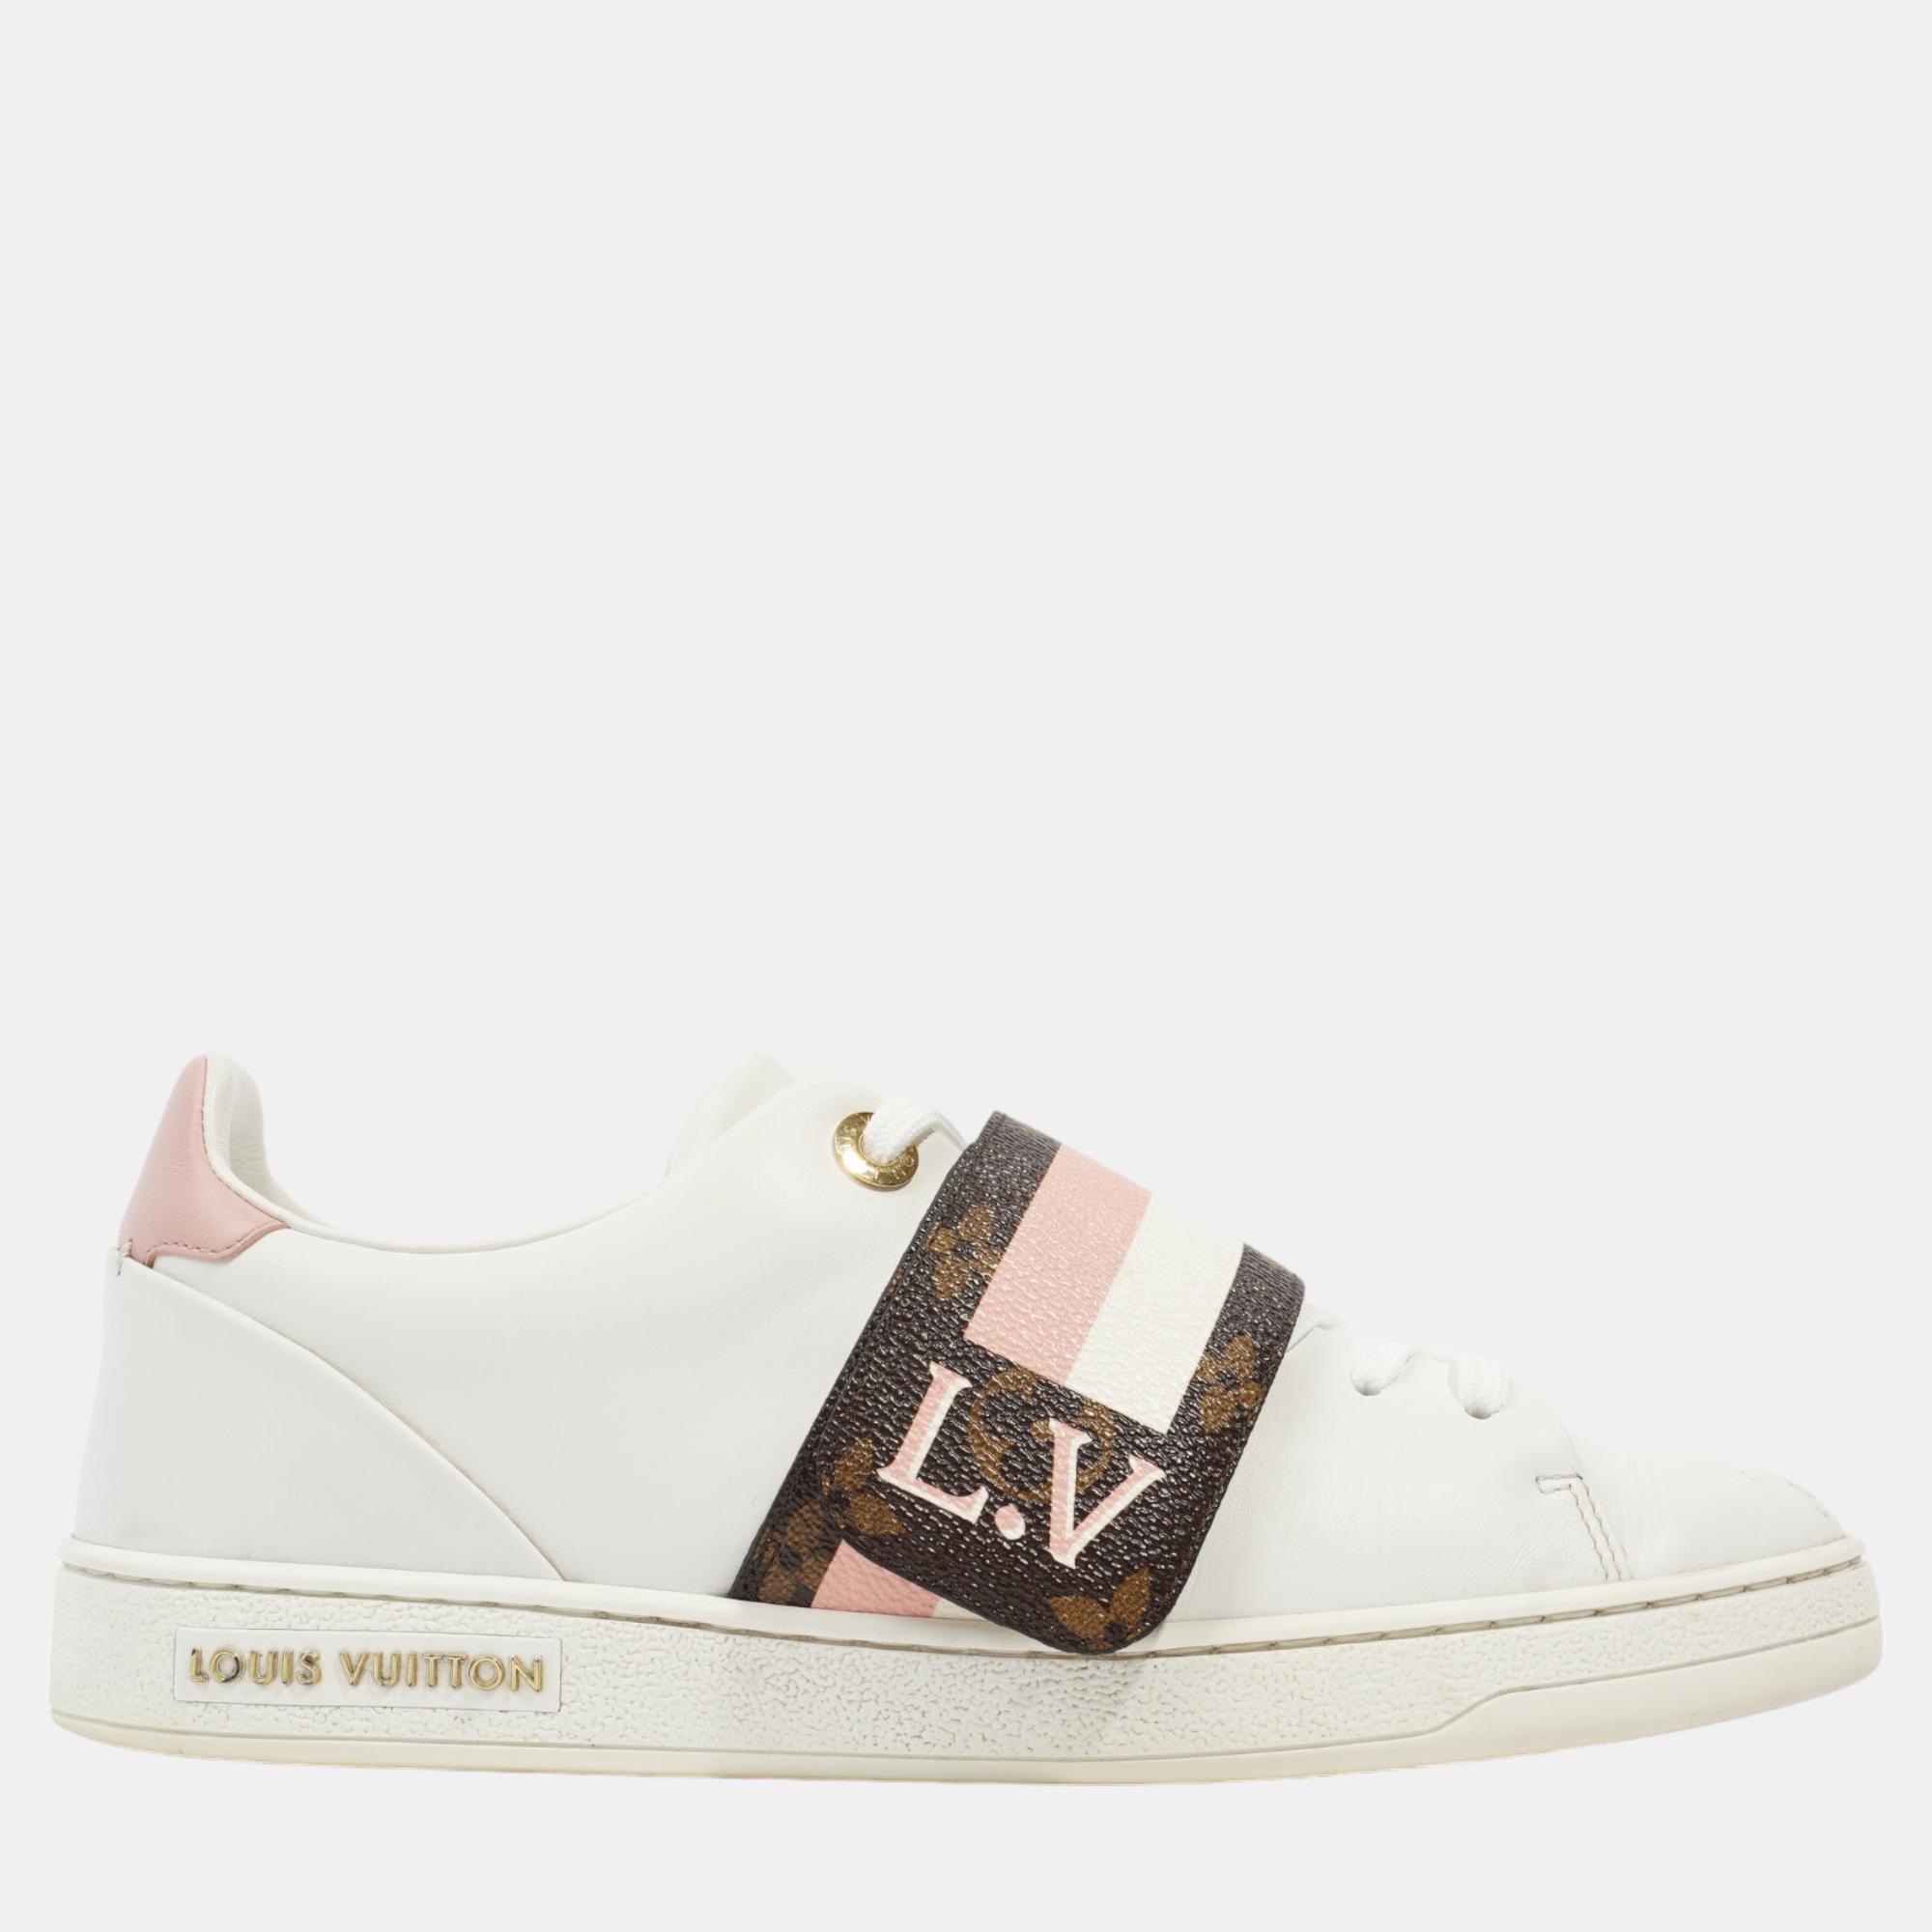 Louis vuitton frontrow sneakers white / brown monogram / pink leather eu 36.5 uk 3.5